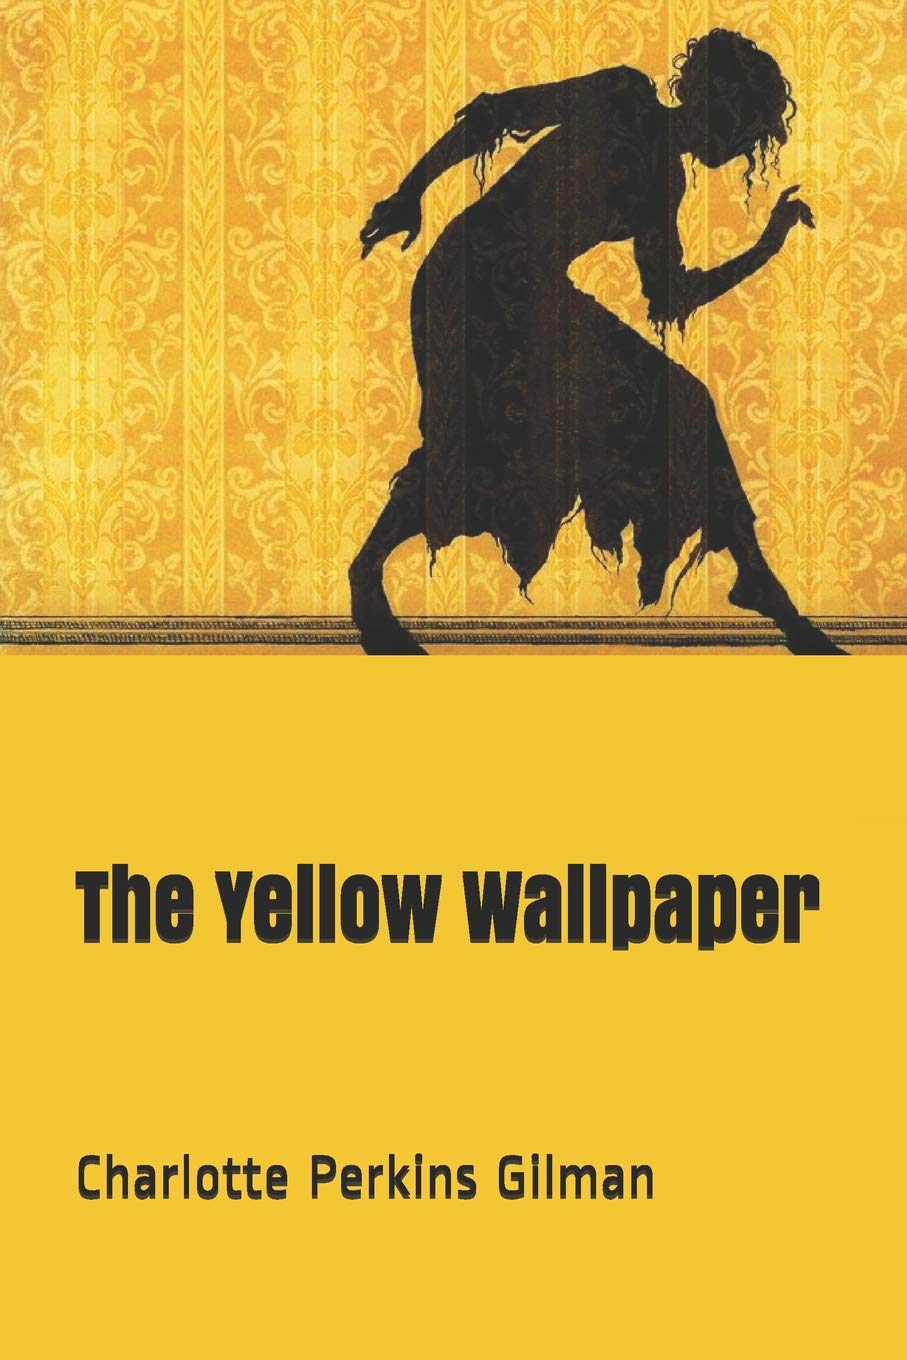 The Yellow Wallpaper Charlotte Perkins Gilman